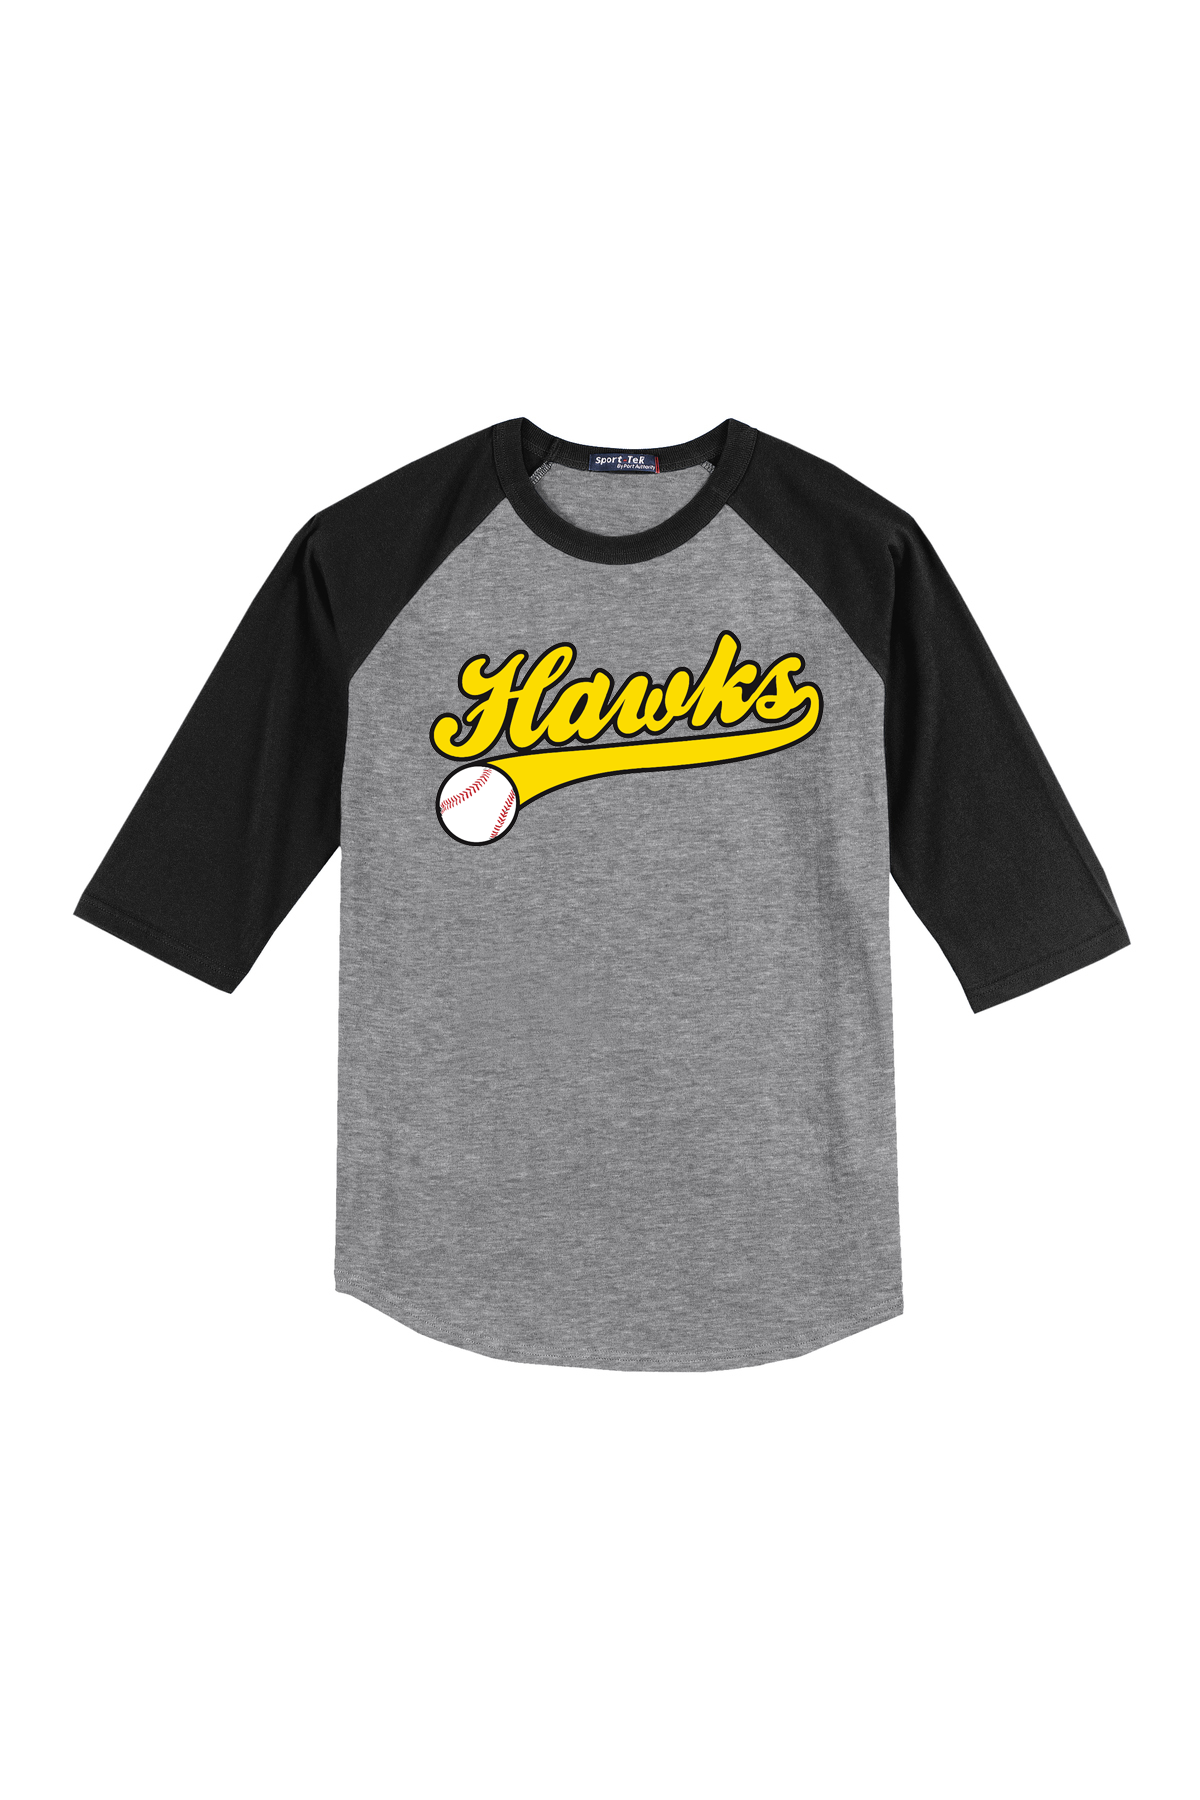 Hawks Baseball 3/4 Sleeve Baseball Shirt